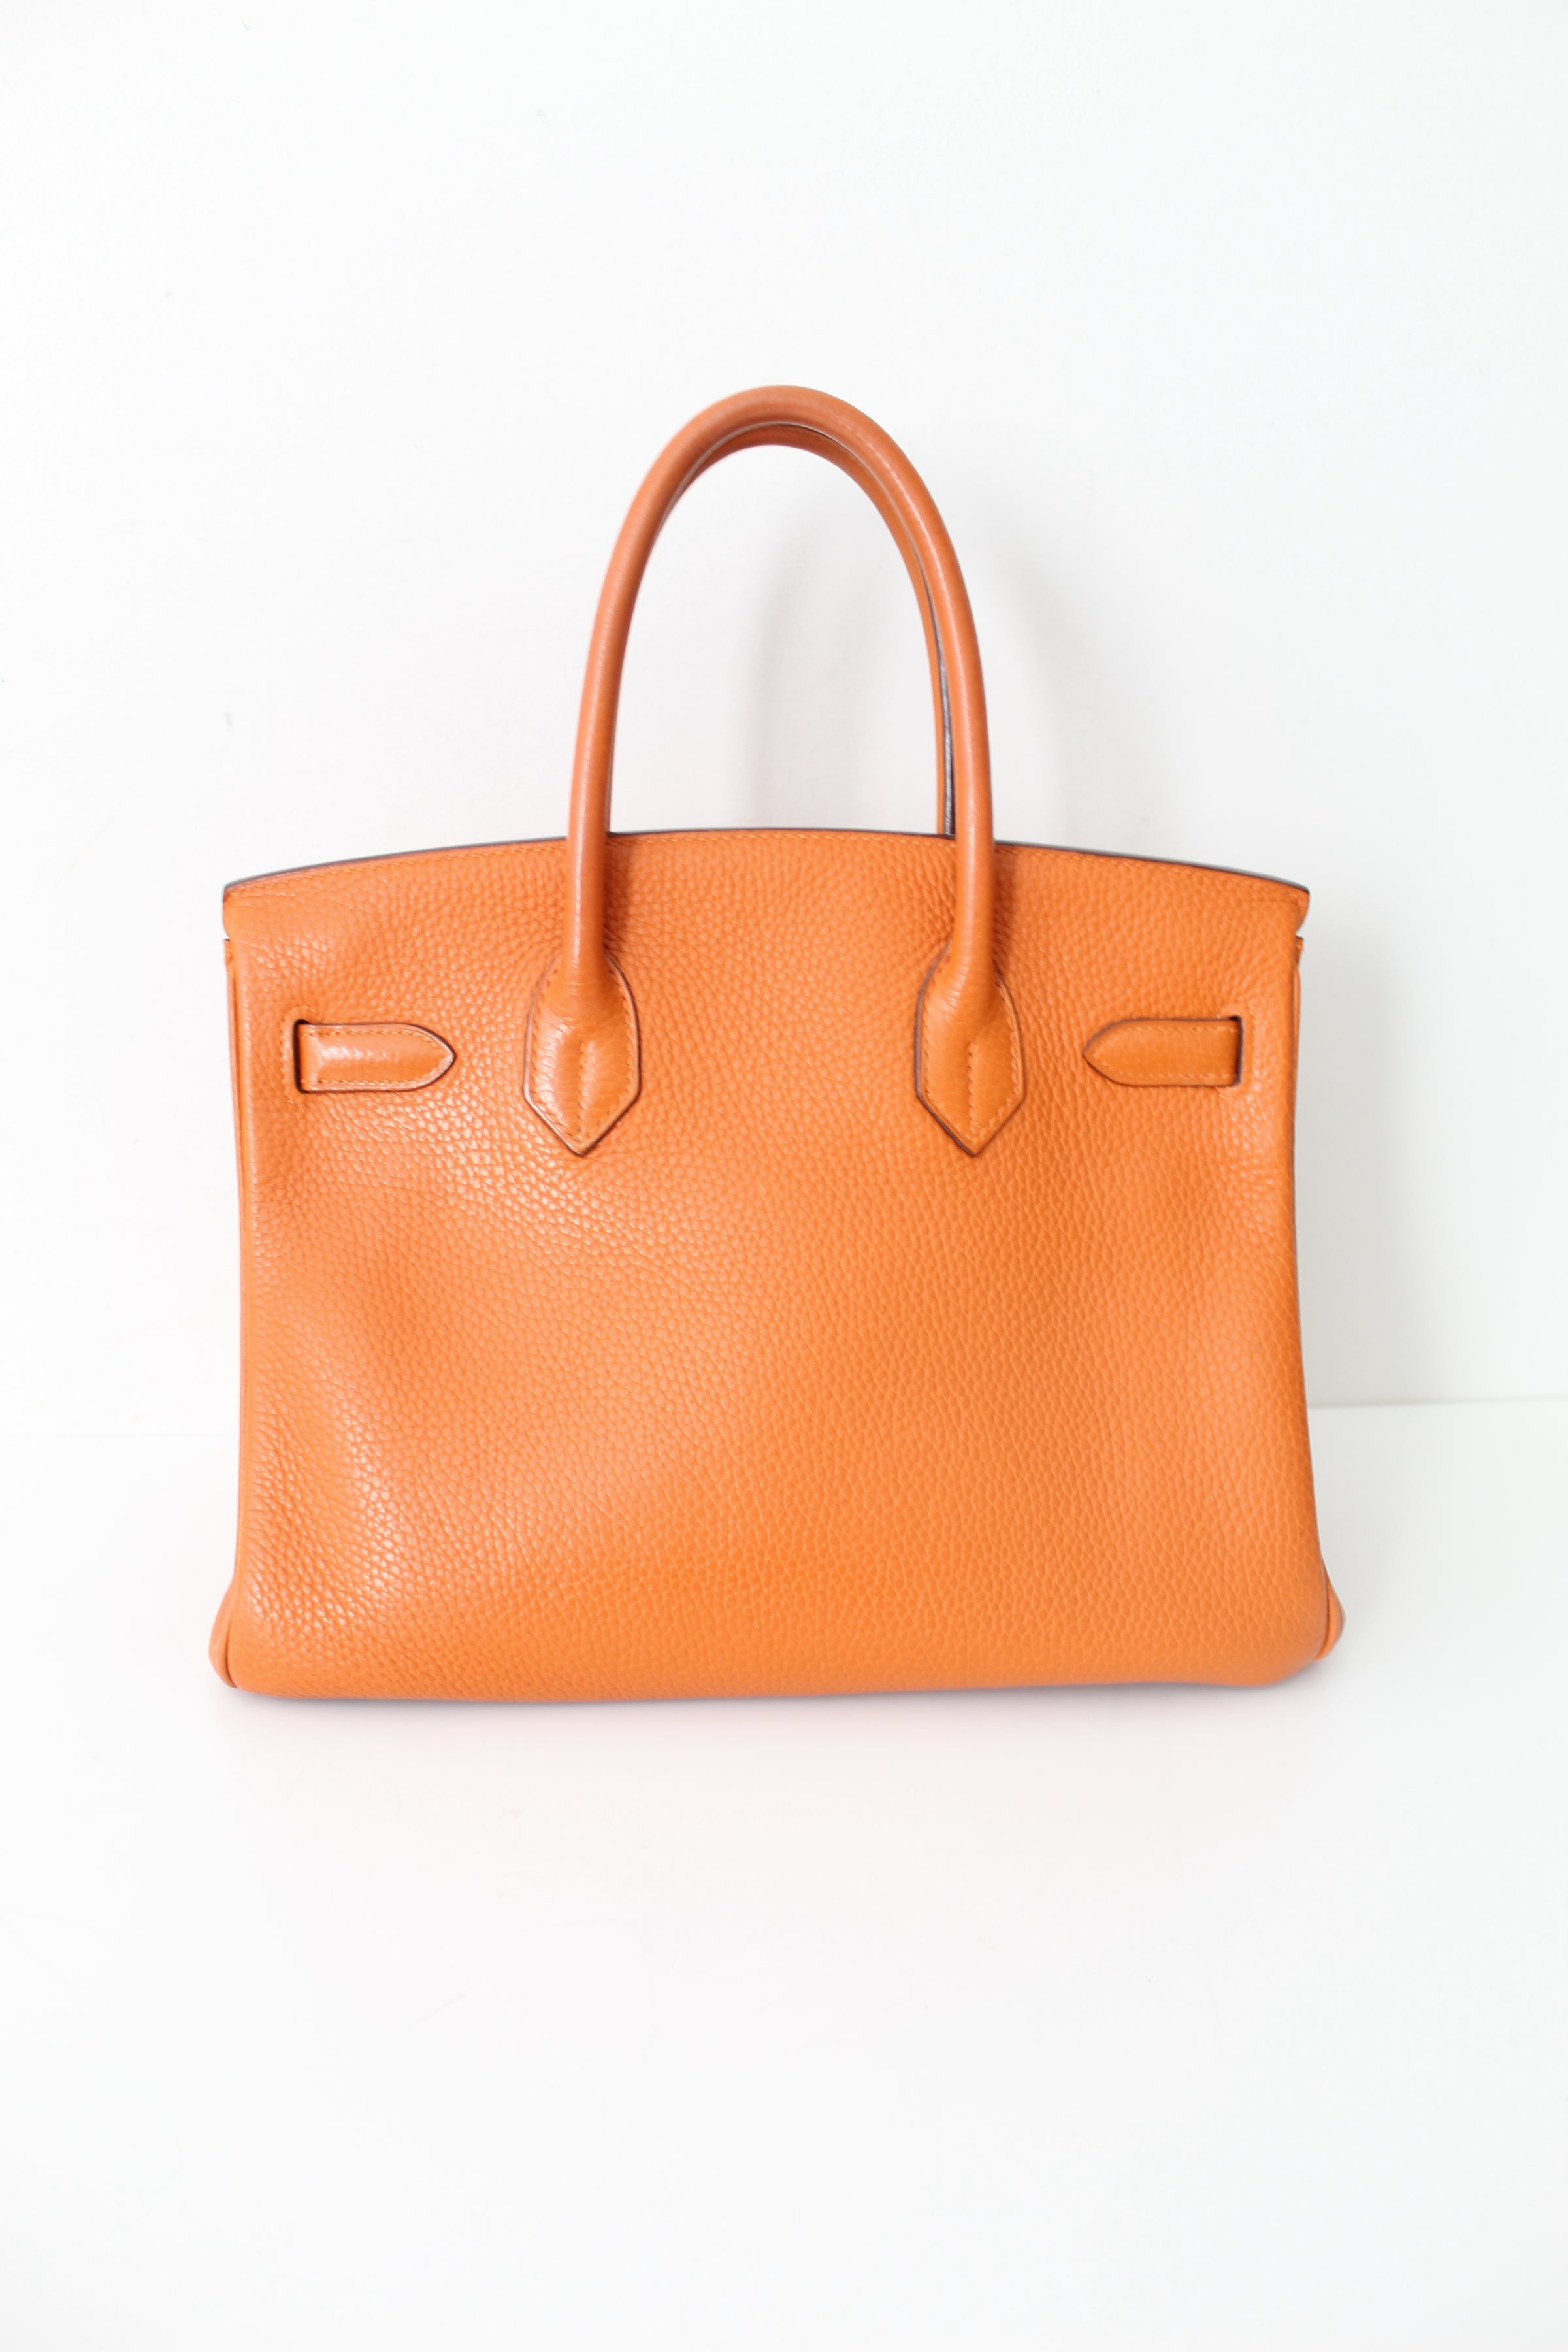 Hermes Birkin Orange - 120 For Sale on 1stDibs  hermes birkin orange  price, orange birkin bag price, birkin orange bag price